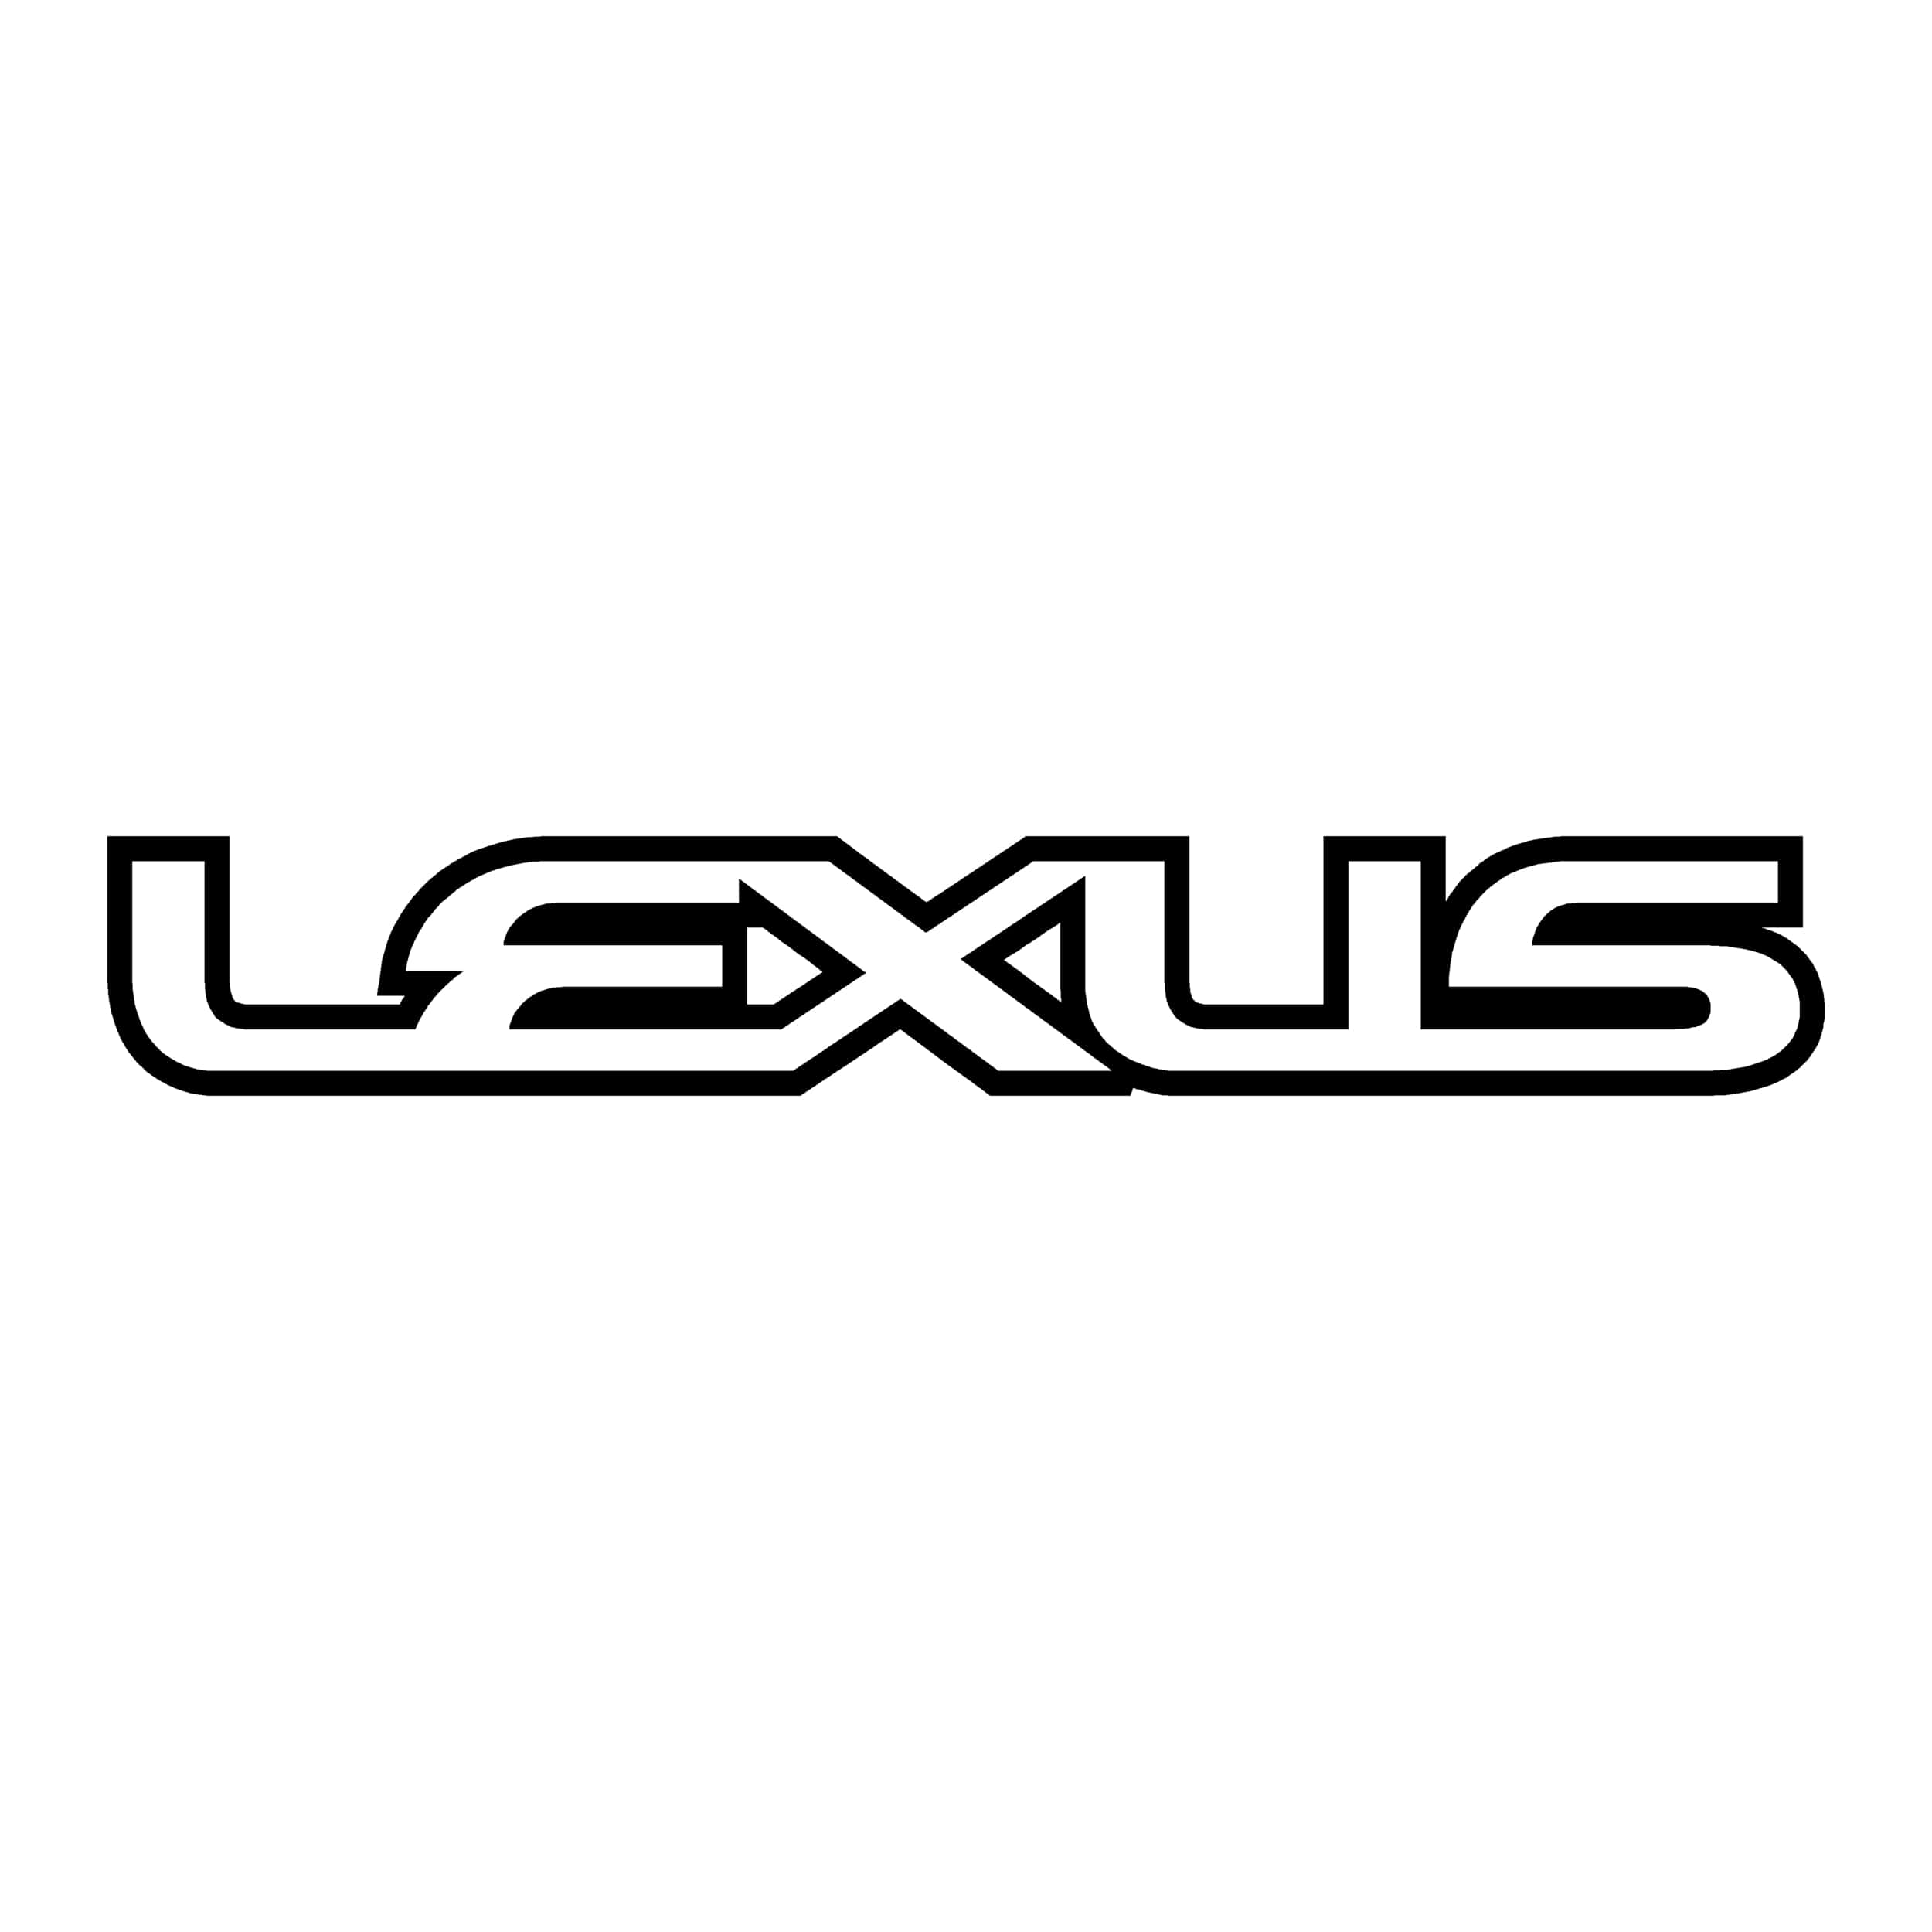 stickers-lexus-ref-5-auto-tuning-amortisseur-4x4-tout-terrain-auto-camion-competition-rallye-autocollant-min